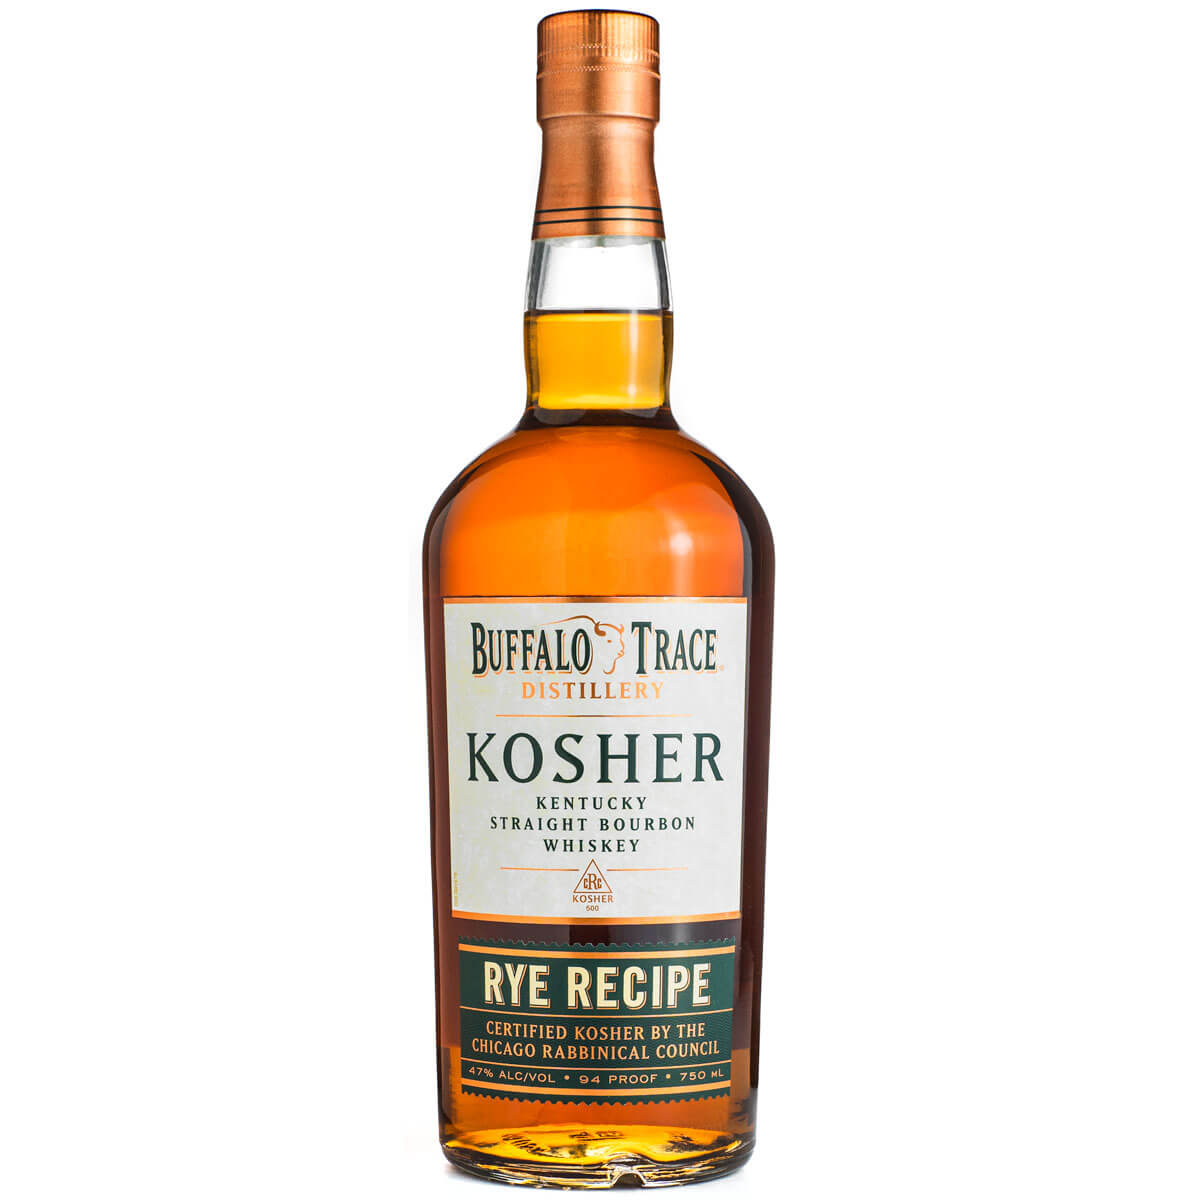 Buffalo Trace Kosher Rye Recipe Bourbon bottle